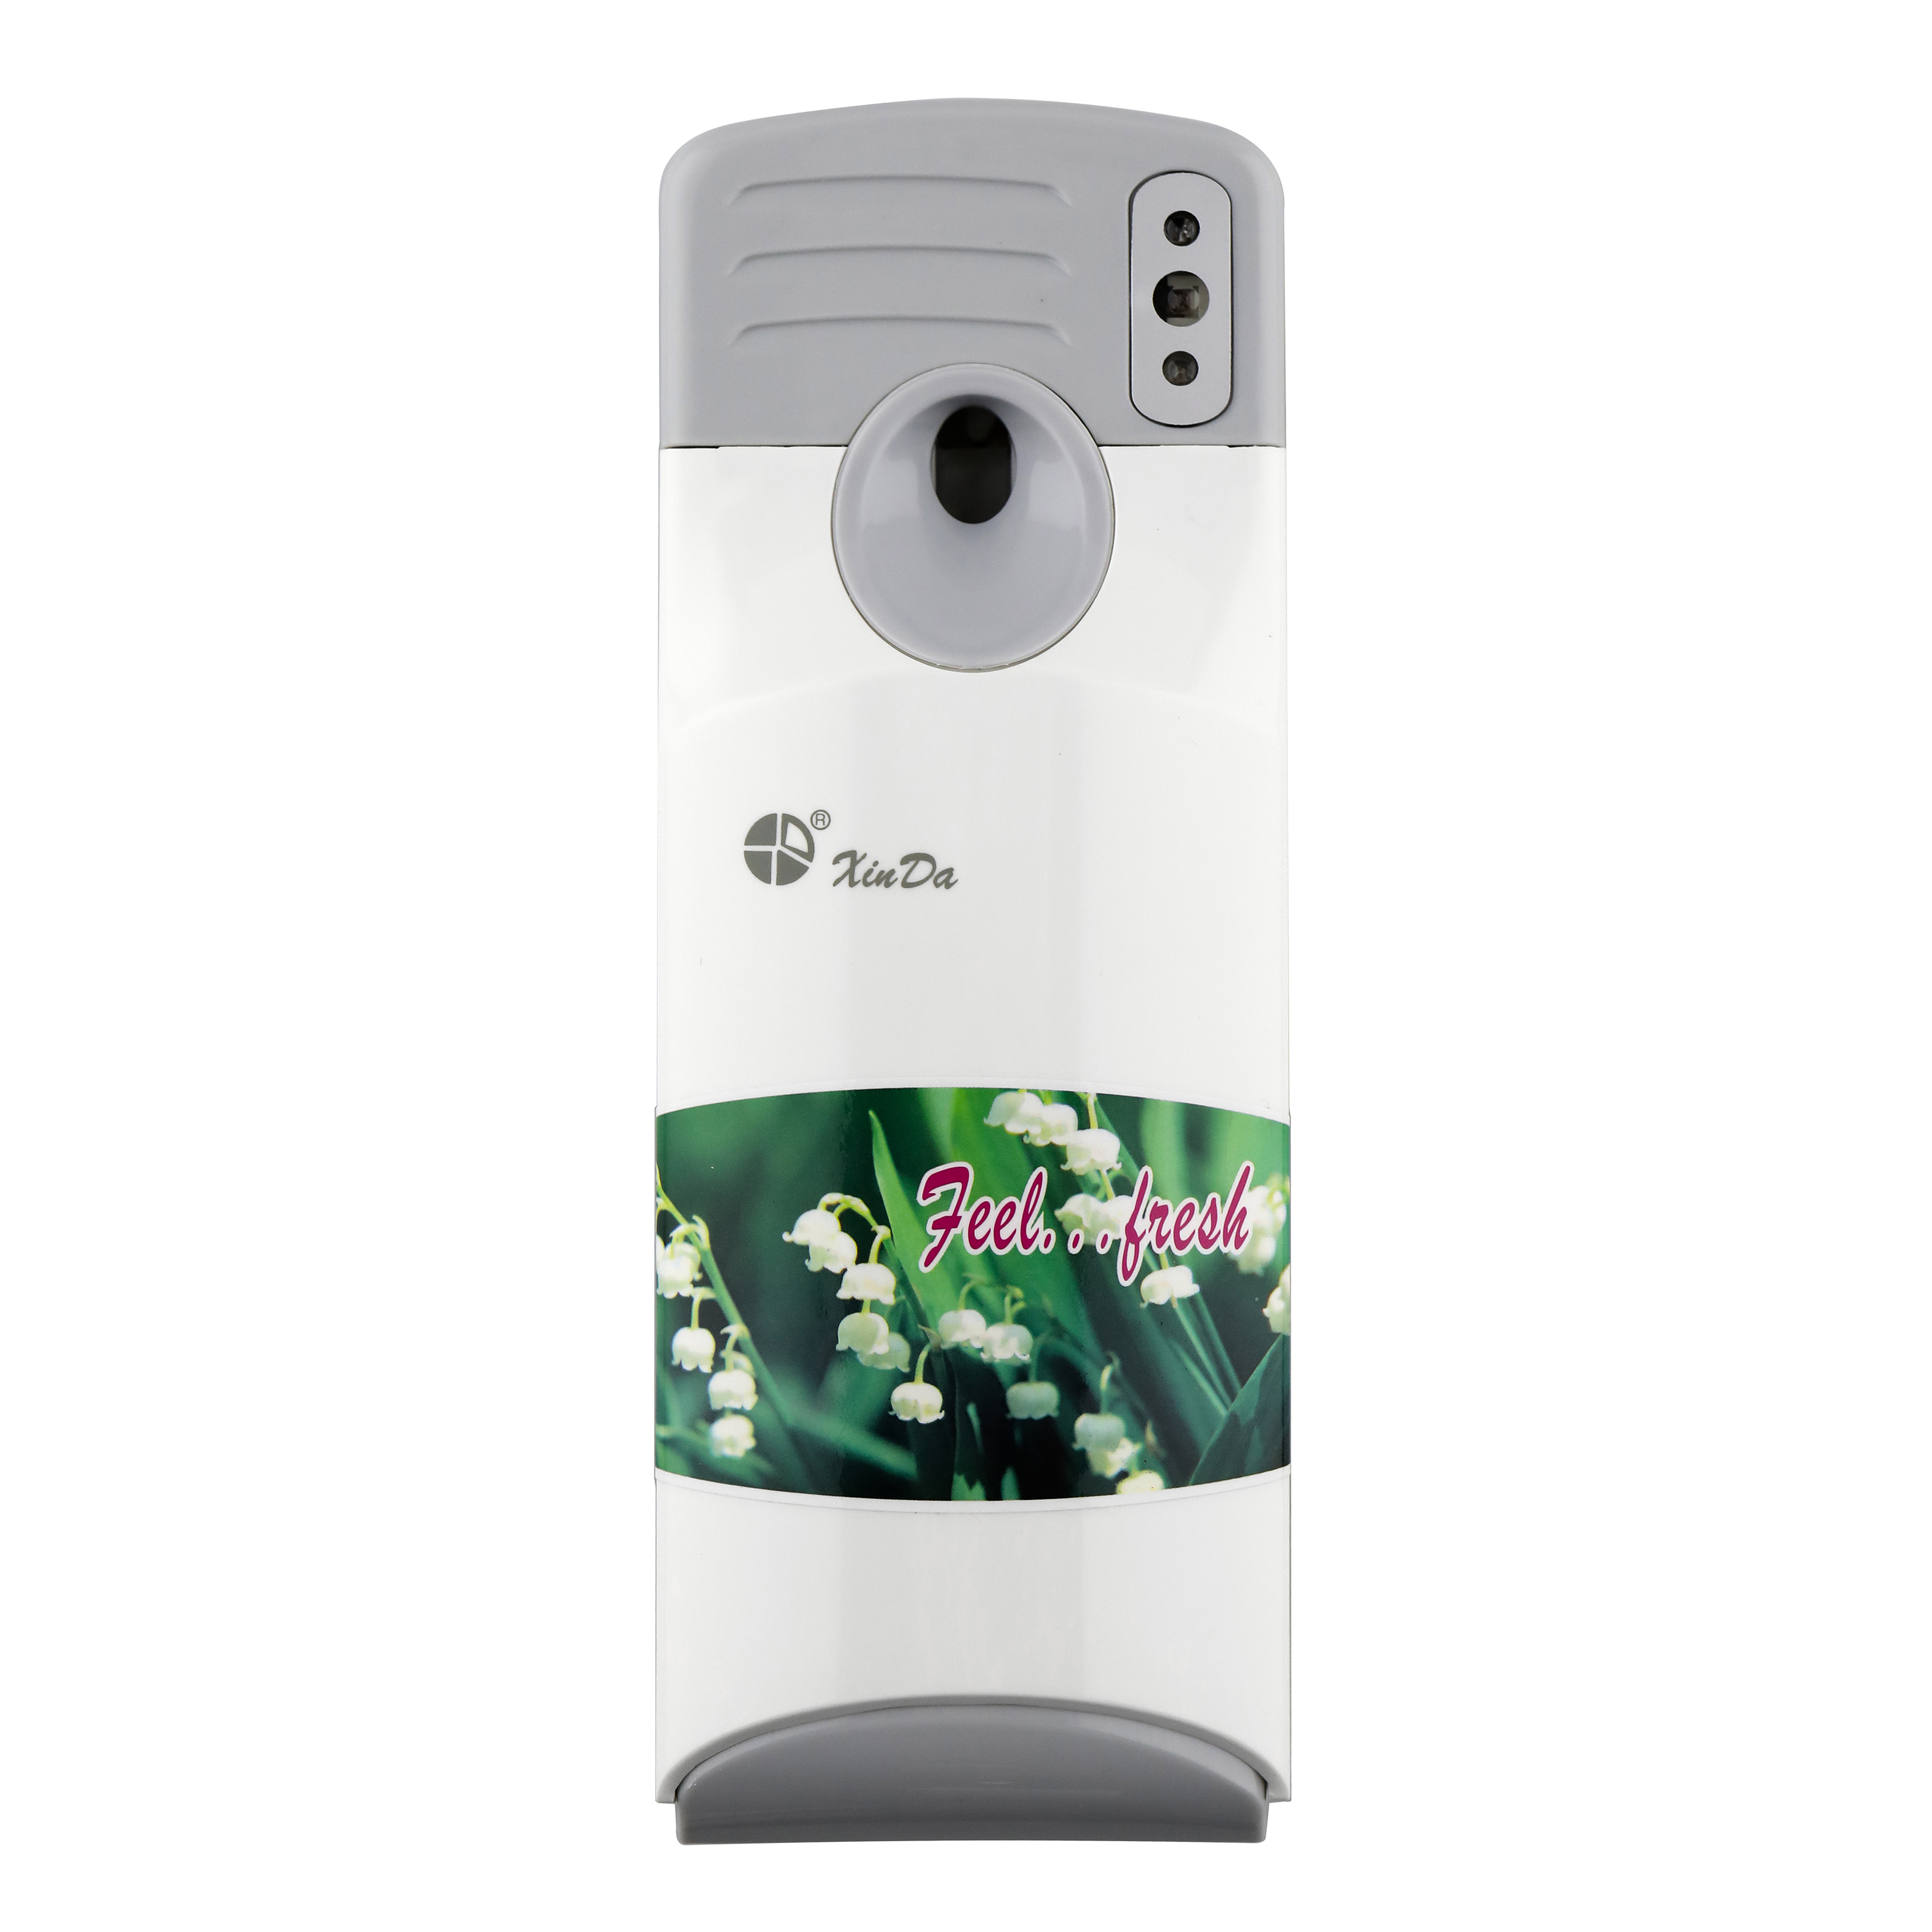 Xinda PXQ 288A Automatic Digital Deodorizer Room Battery Refillable Fragrance Diffuser Air Freshener Perfume Dispenser Air Purifi